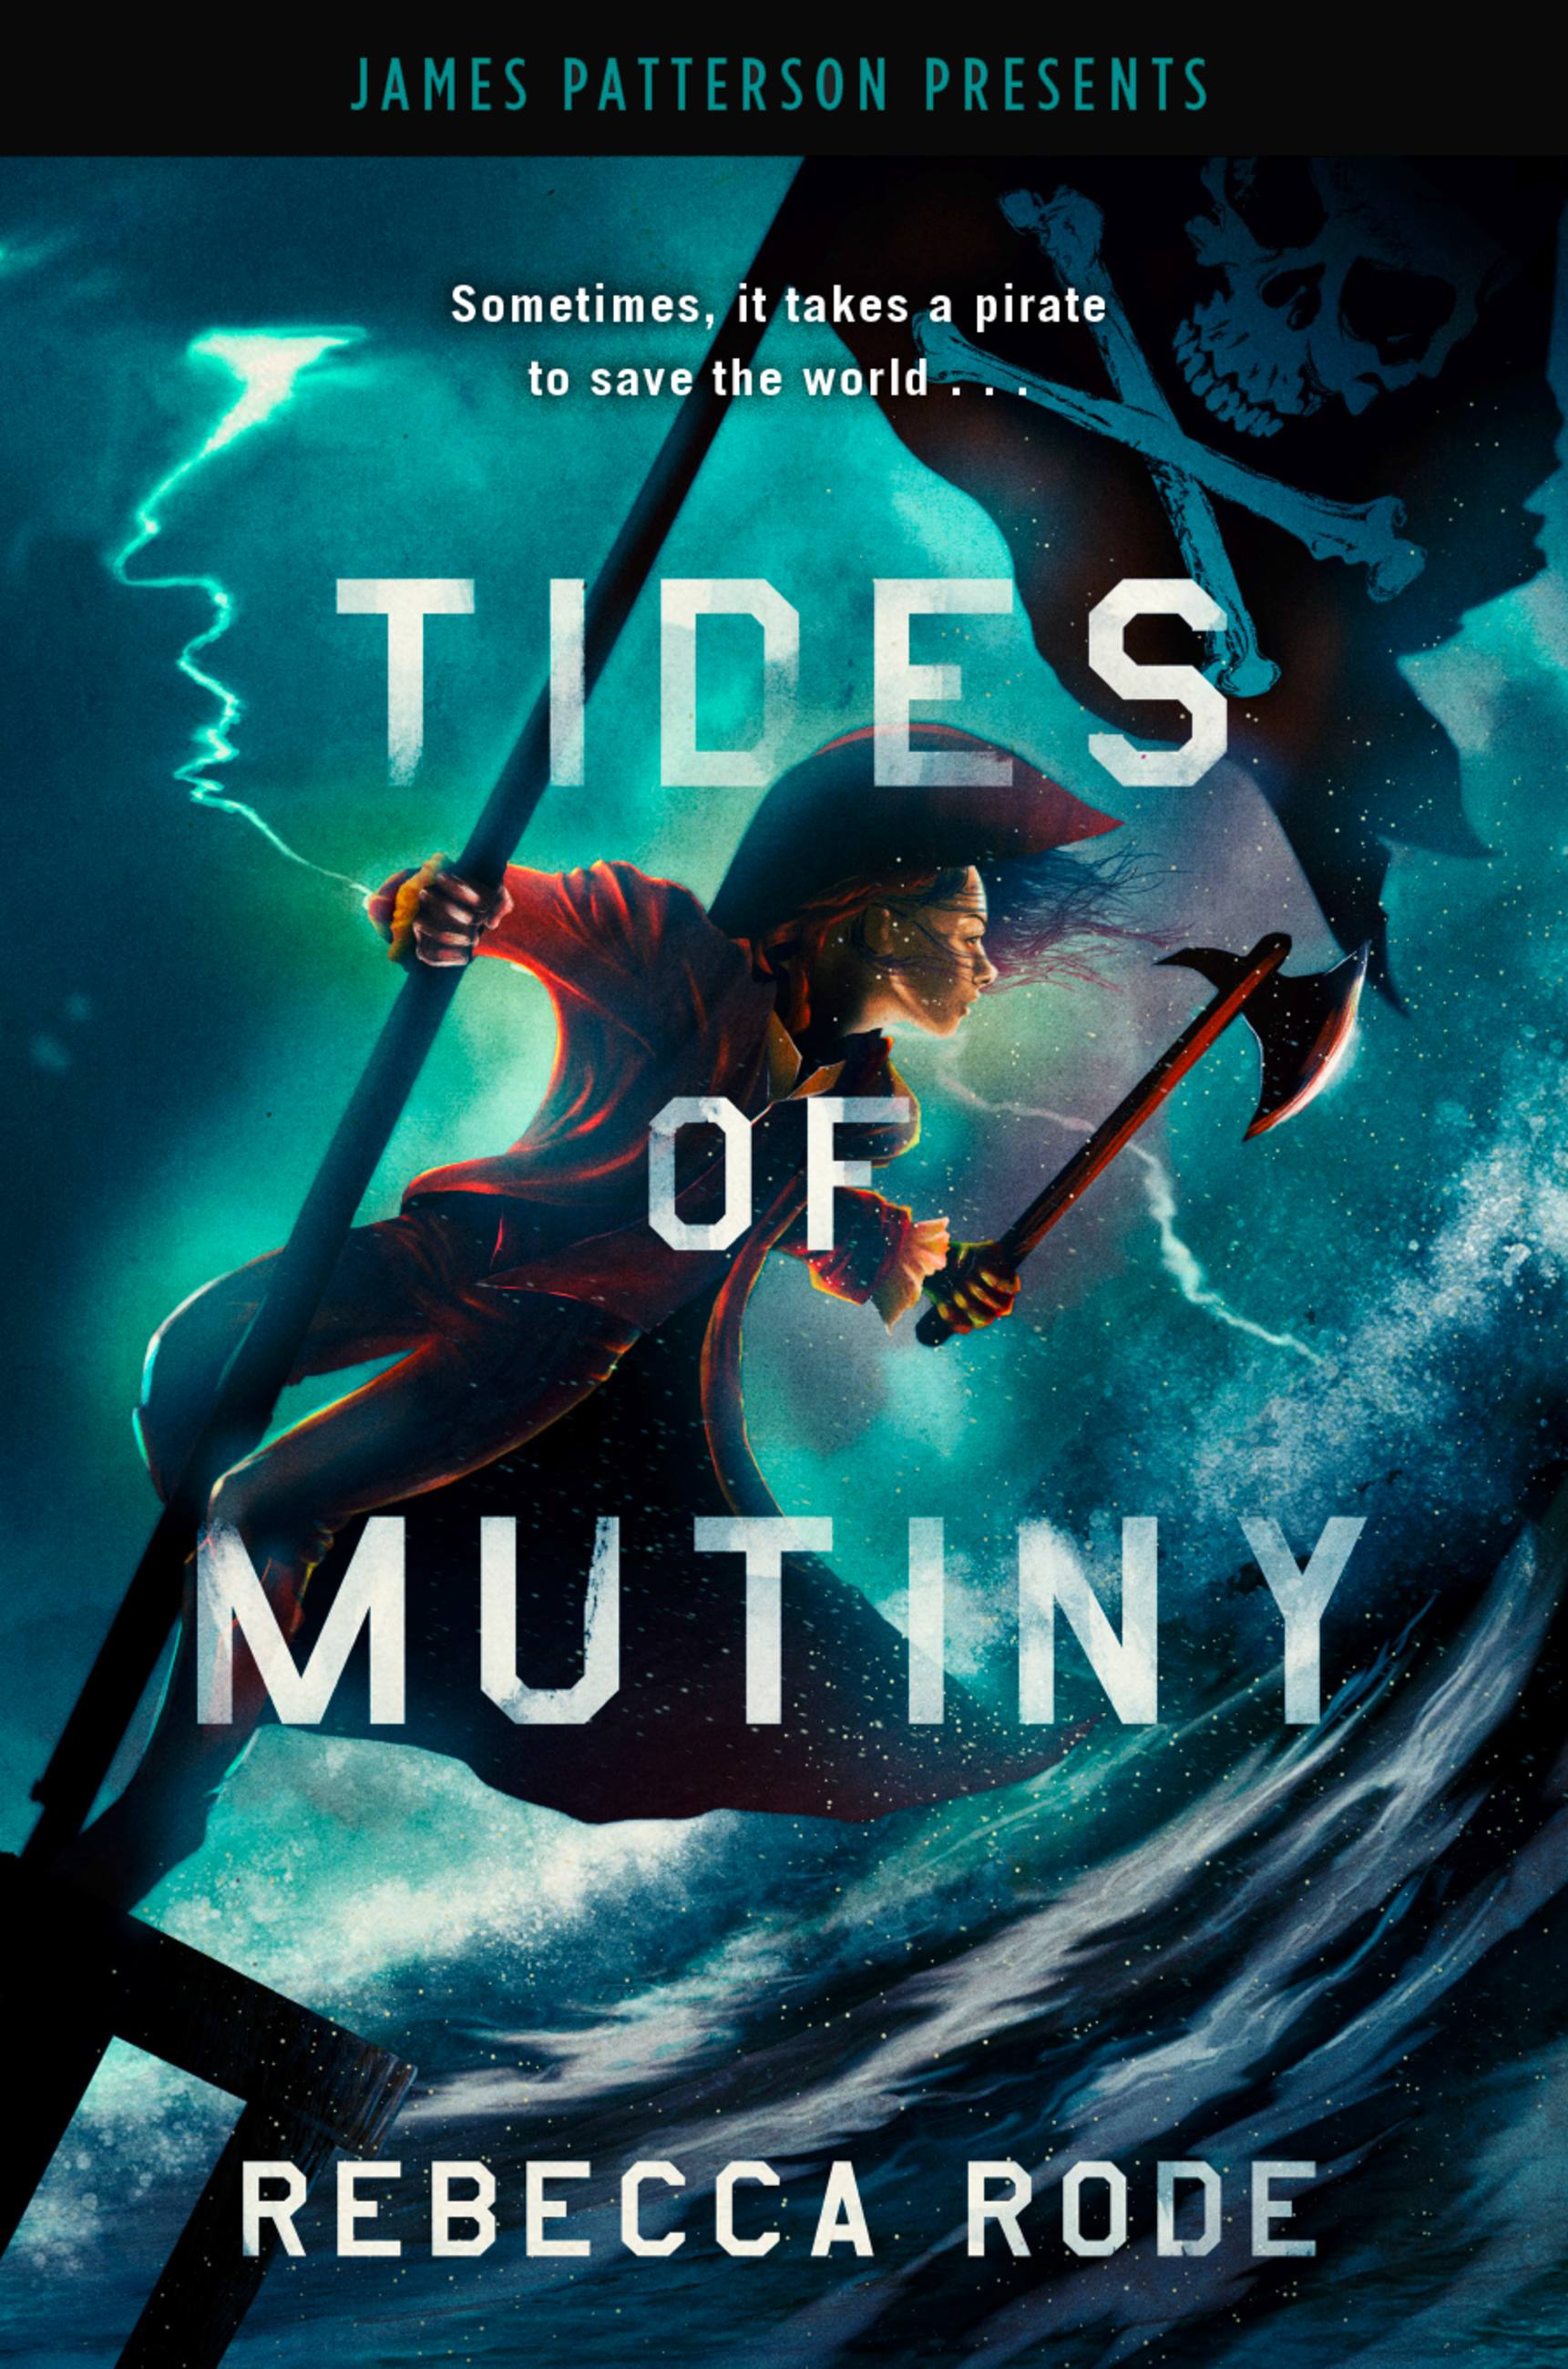 Tides of Mutiny by Rebecca Rode | Jimmy Patterson